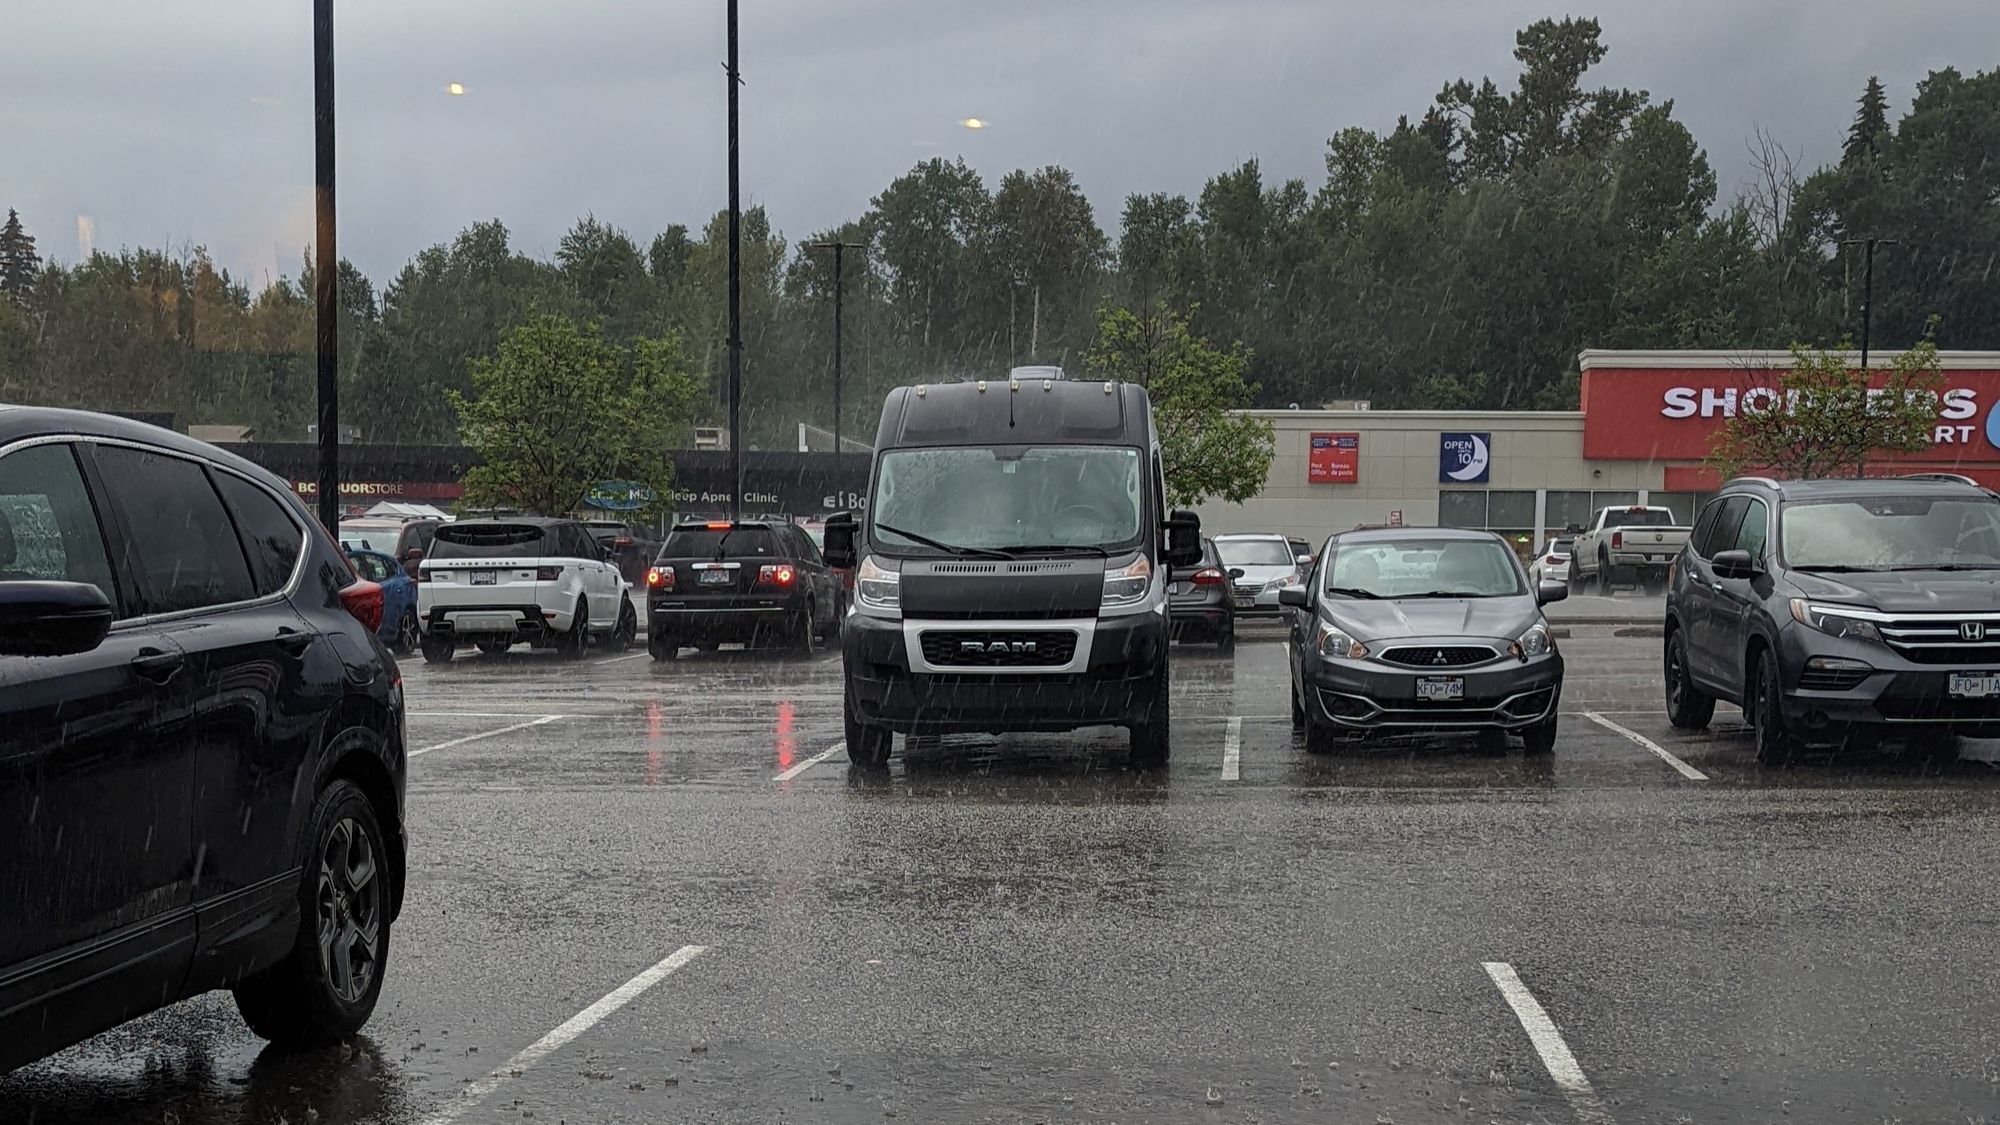 Parking lots on rainy days.